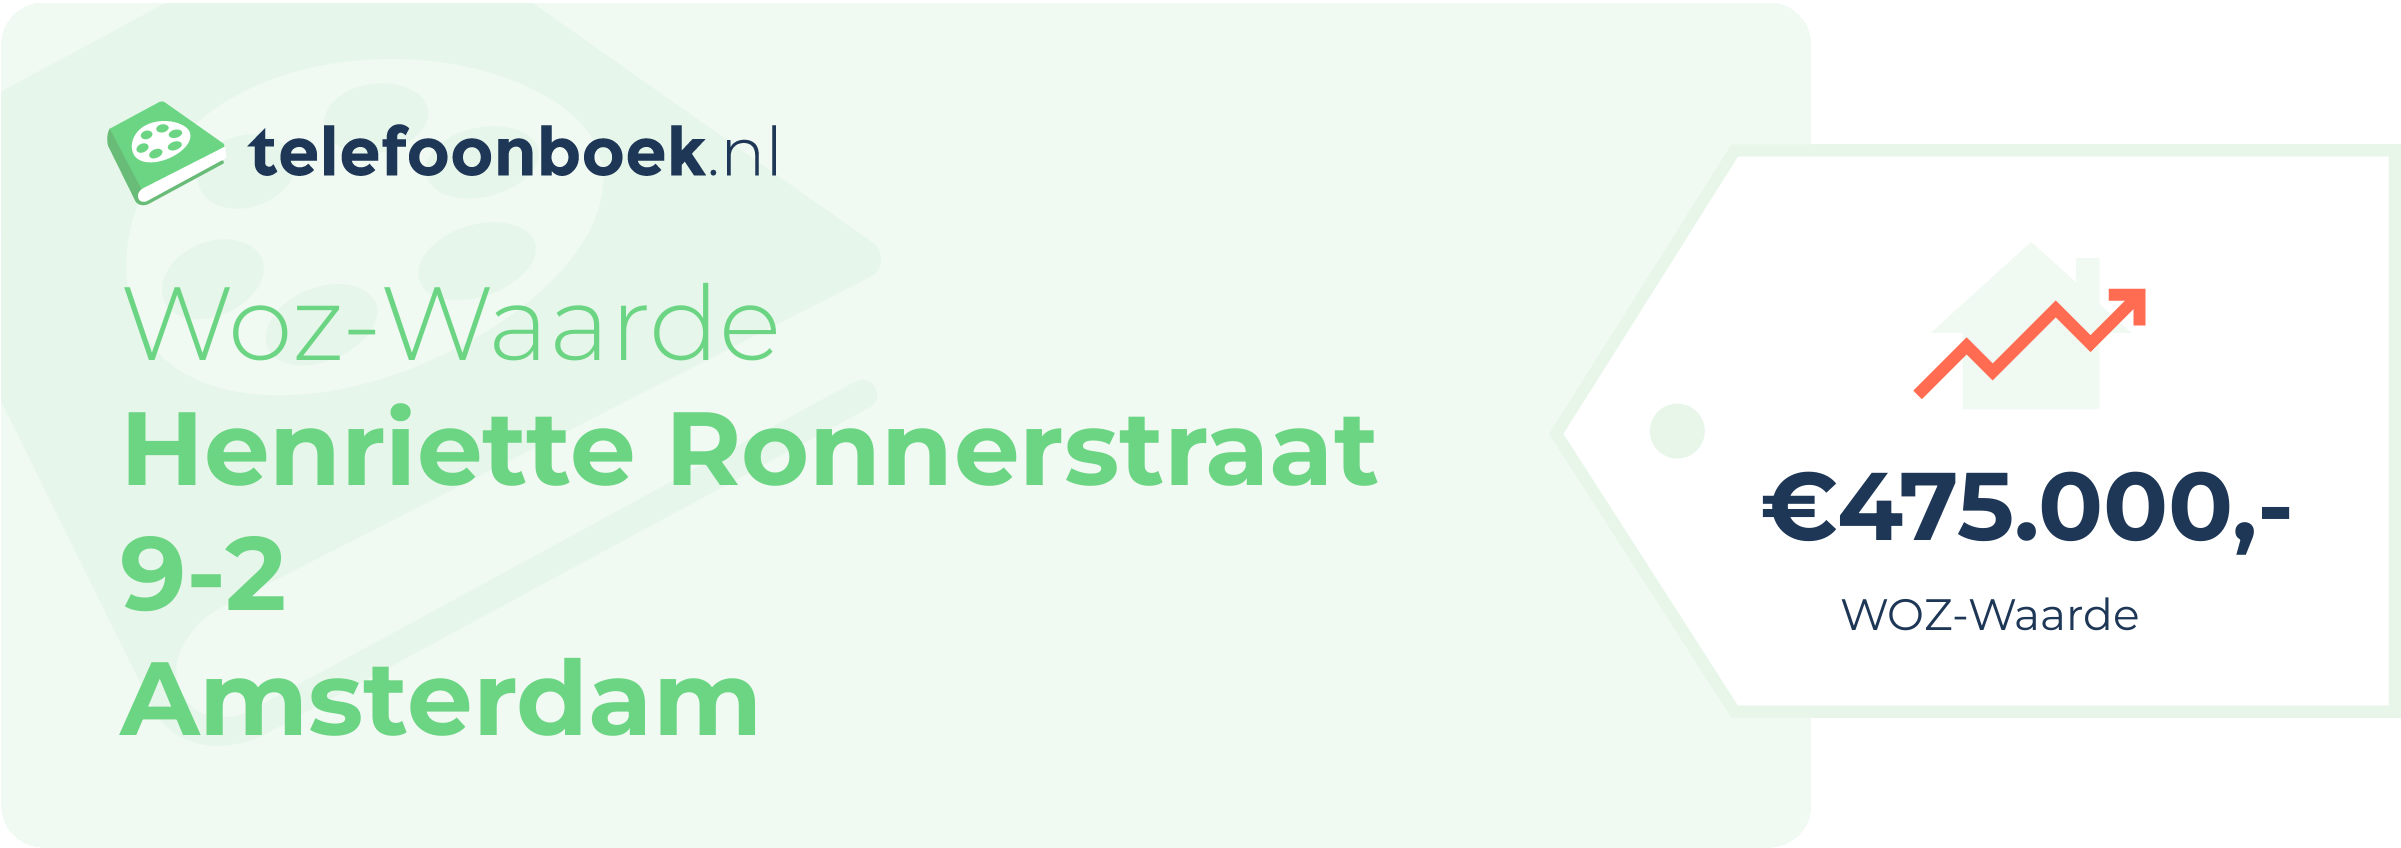 WOZ-waarde Henriette Ronnerstraat 9-2 Amsterdam